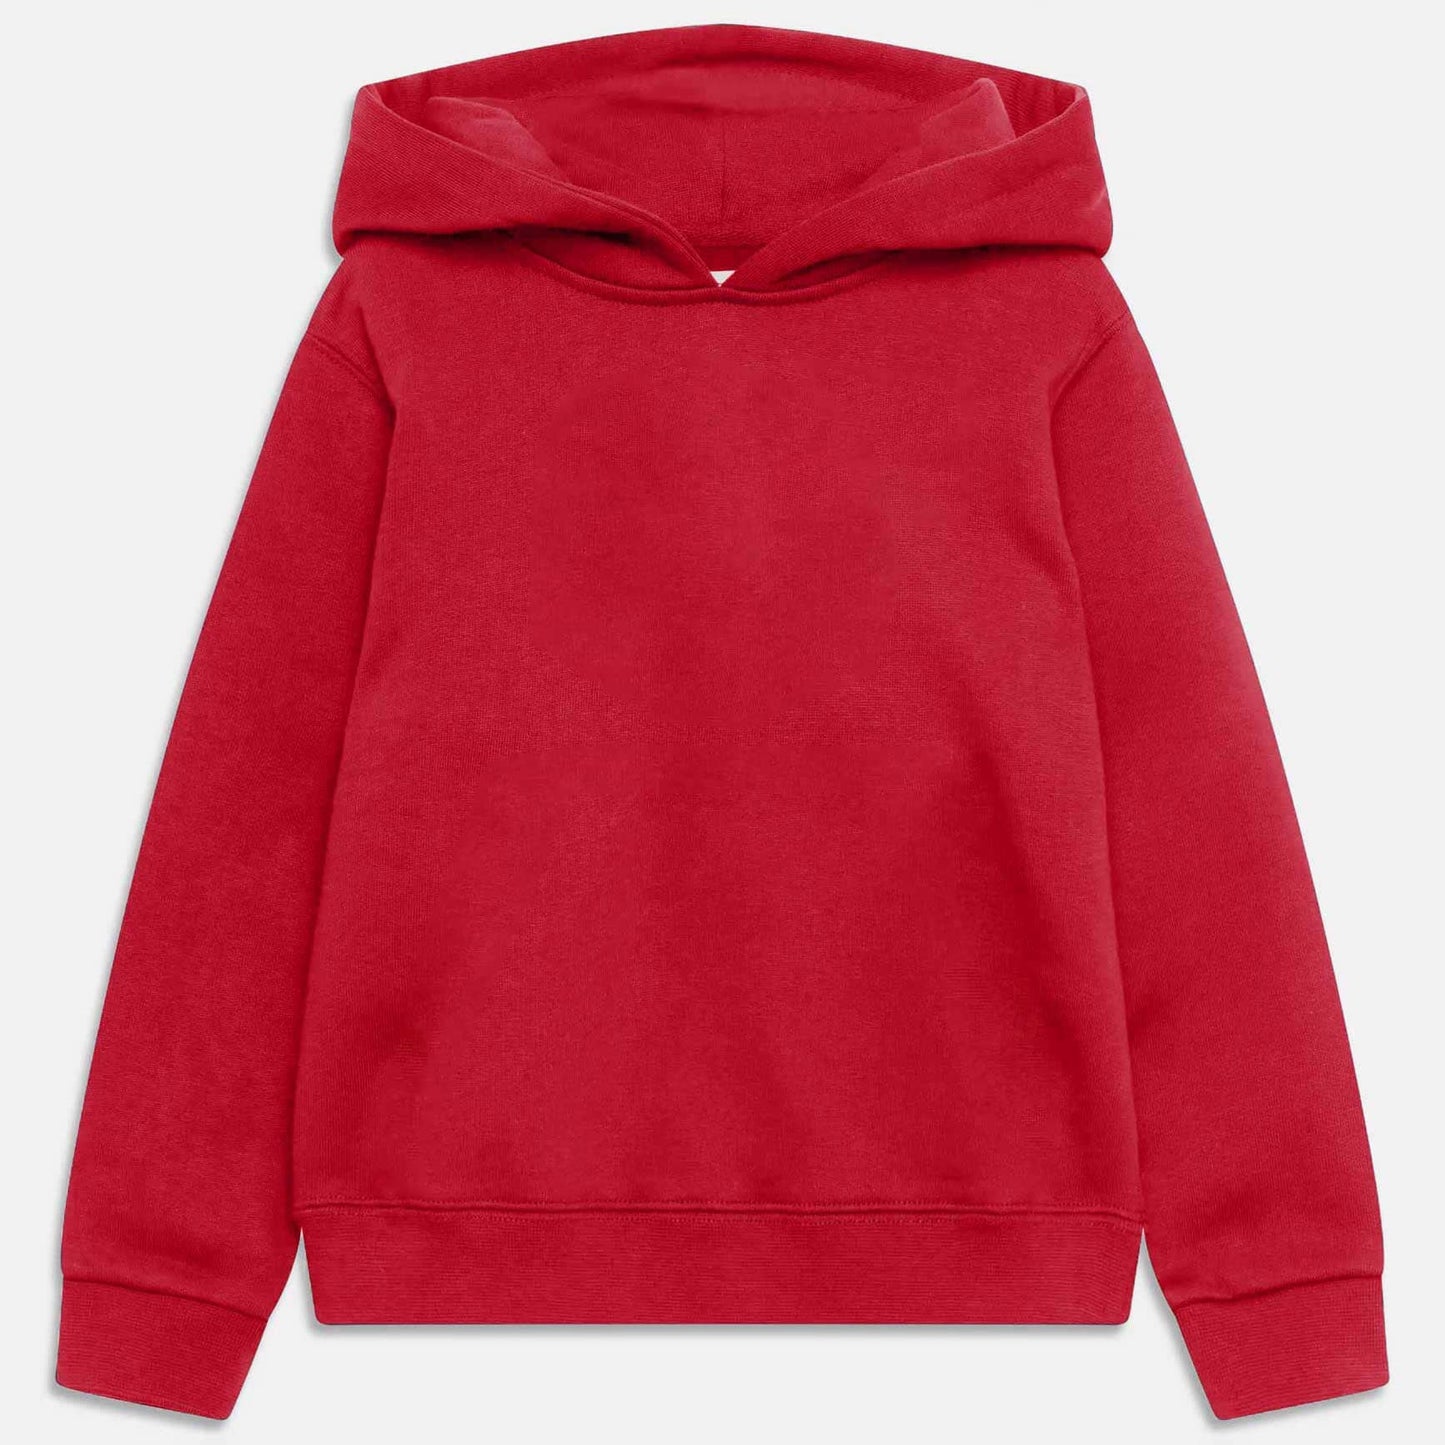 Rabbit Skins Kid's Solid Design Fleece Minor Fault Pullover Hoodie Boy's Pullover Hoodie Minhas Garments Red 2 Years 